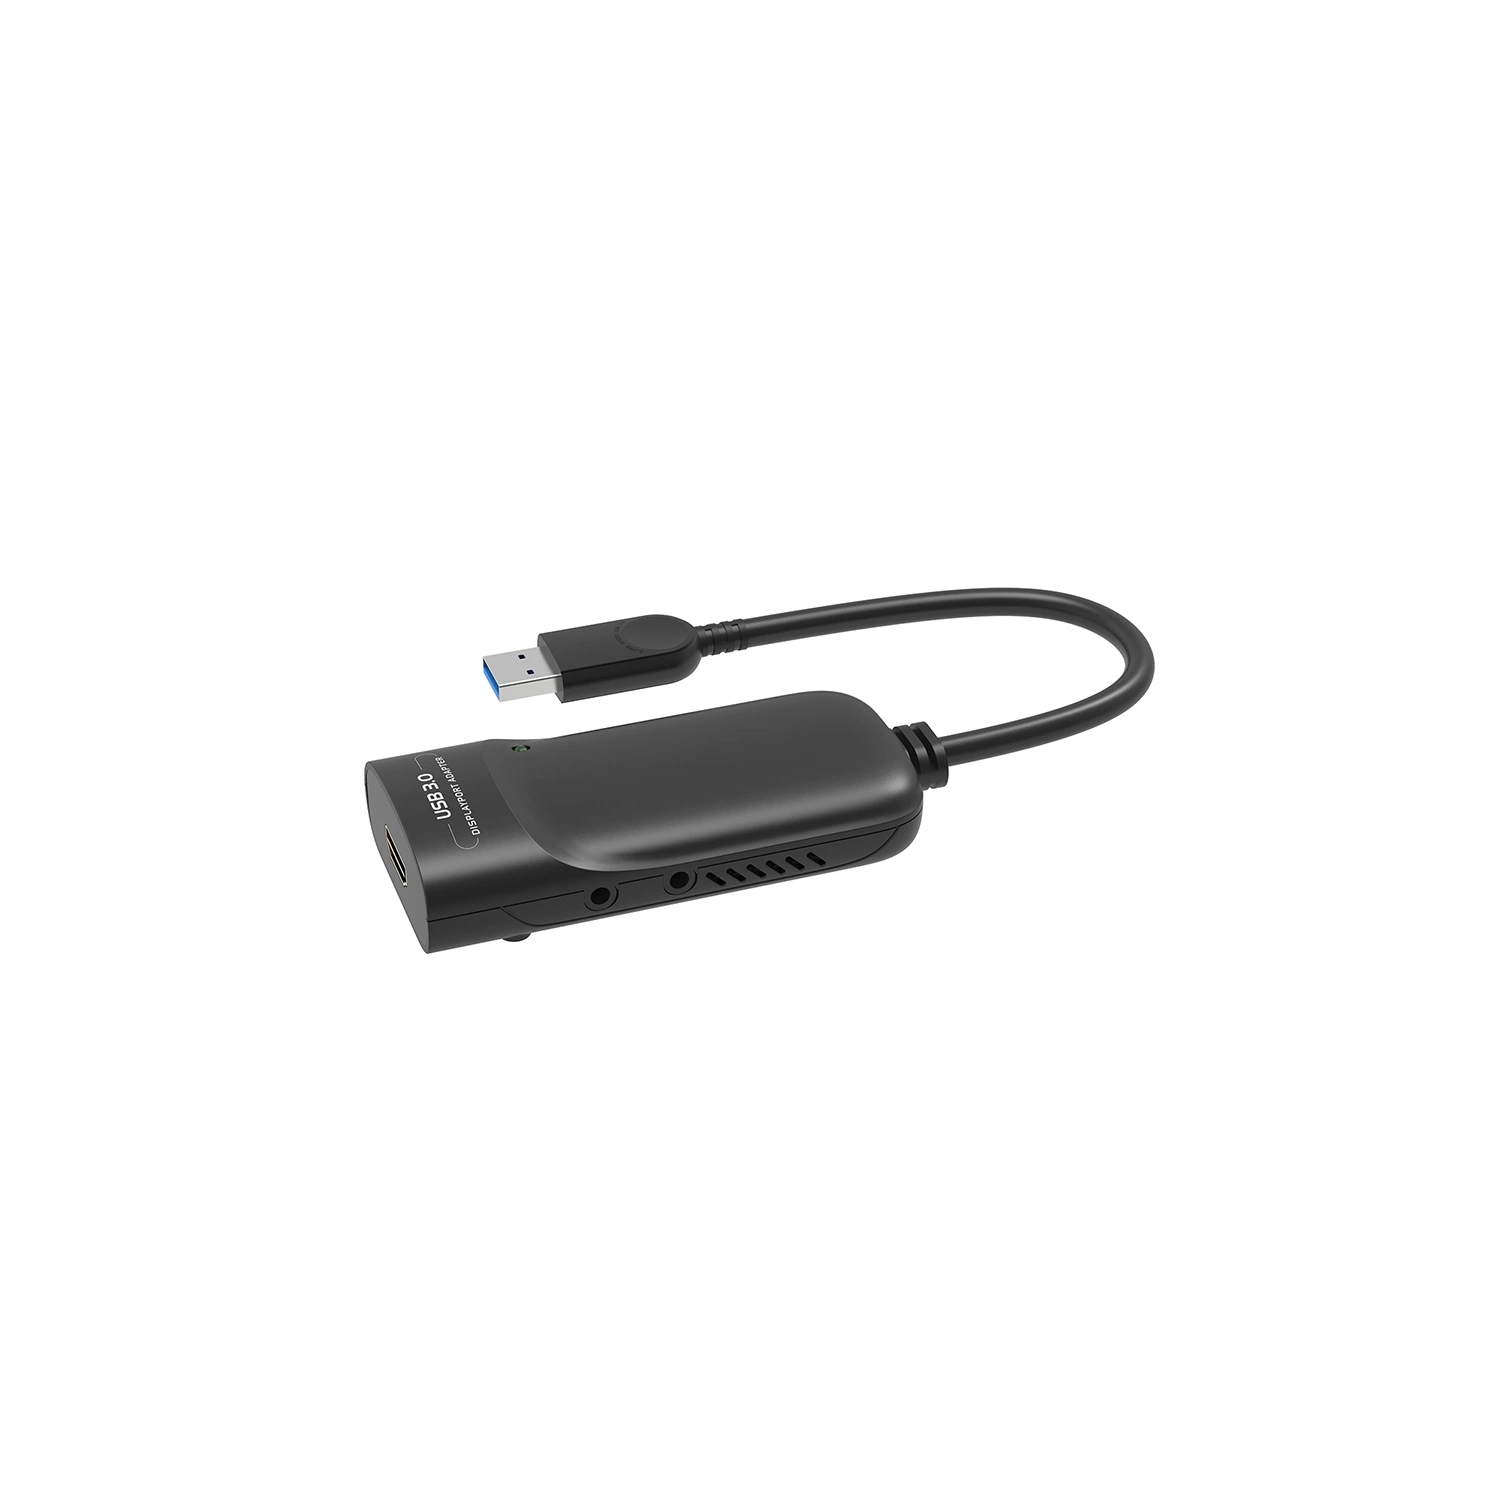 Winstars Ug5501h USB 3.0 to 4K HDMI Video Graphic HDMI Adapter